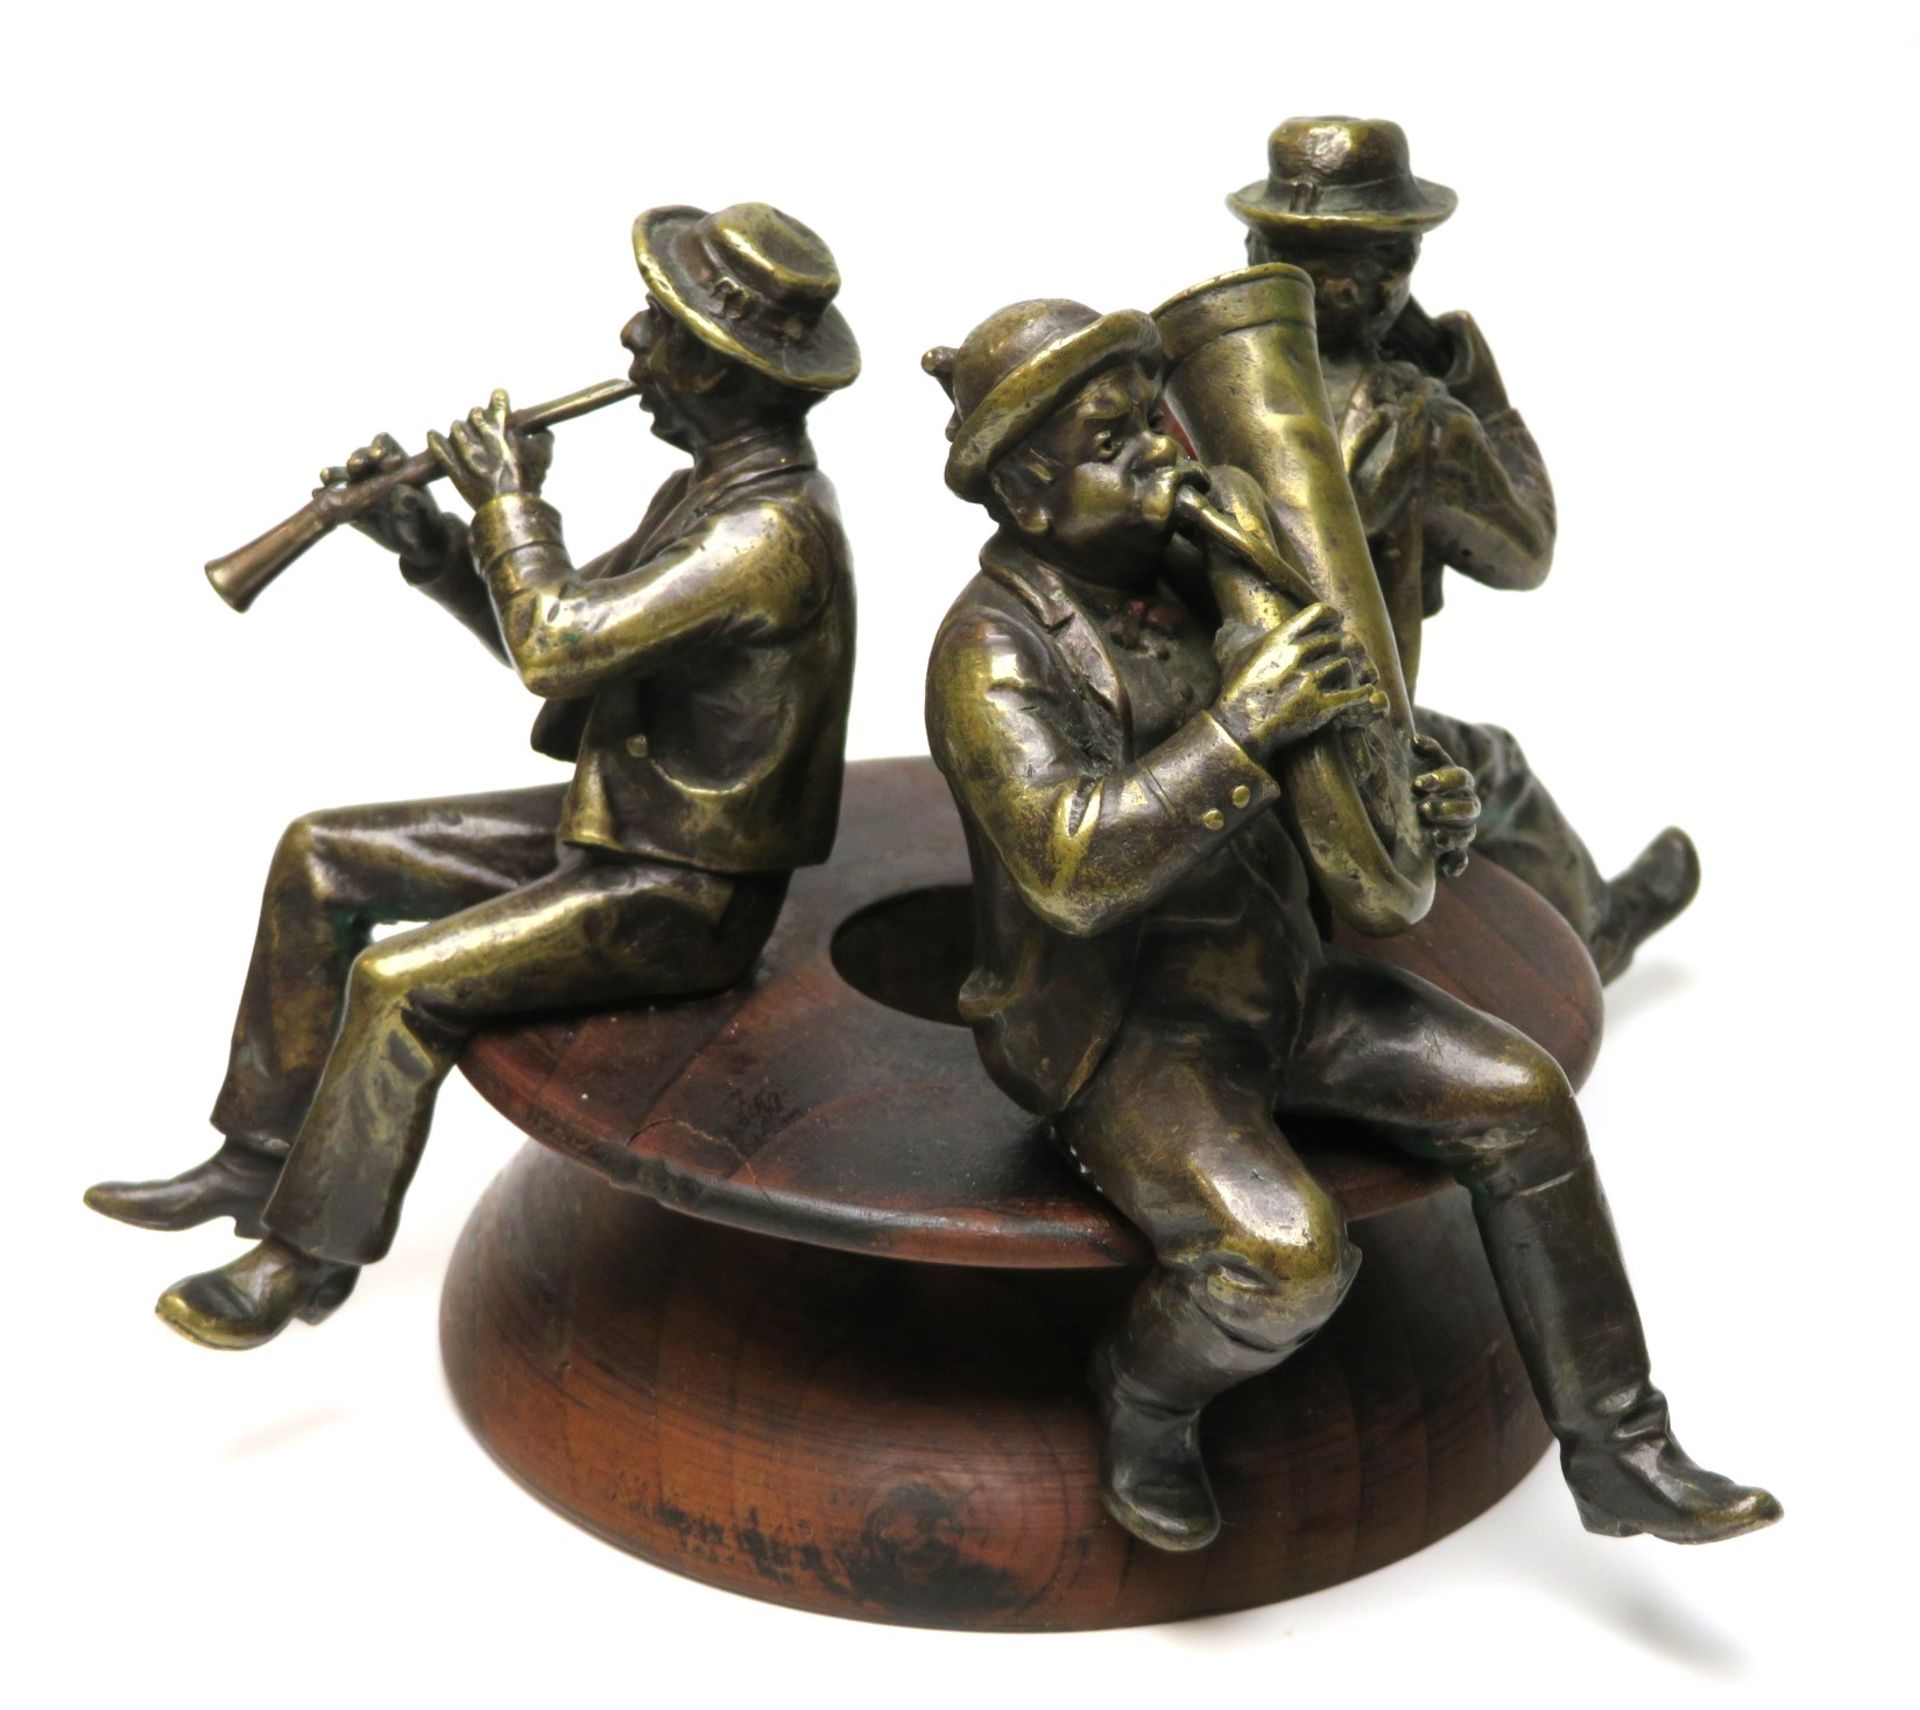 Unbekannt, um 1900, Drei bayrische Musikanten, Bronze, Holzsockel, h 11,5 cm, d 18 cm.